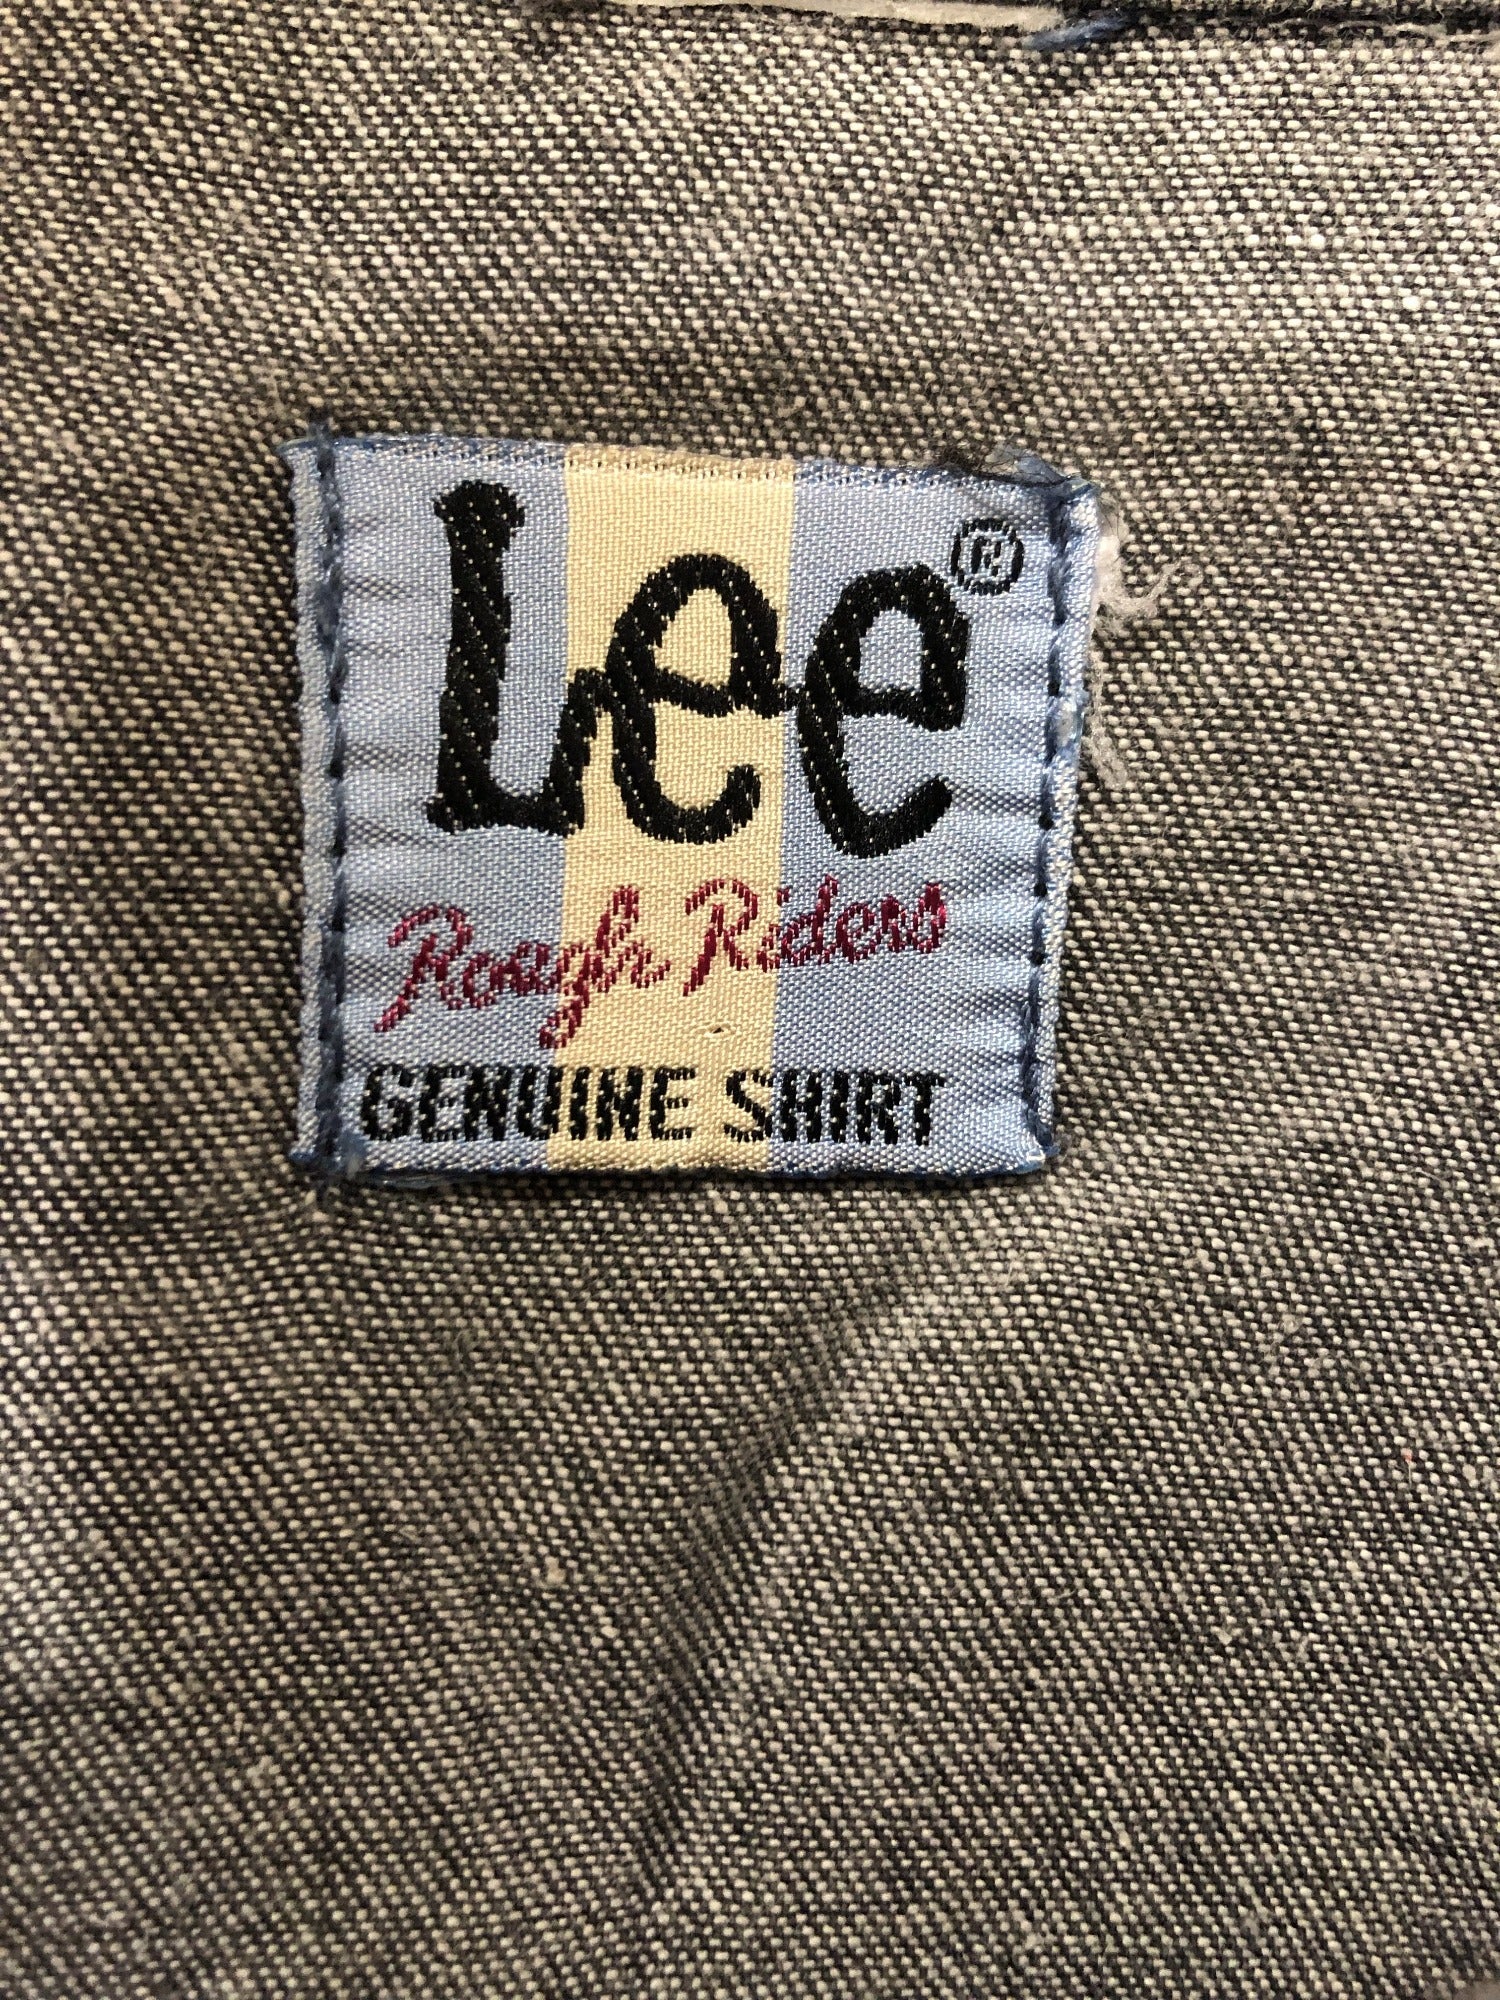 Rough Riders  Lee  wrangler  vintage  Urban Village Vintage  Shirt  Mens Shirts  mens  m  jean  jacket  Grey  Green  fitted  denim shirt  denim  70s style